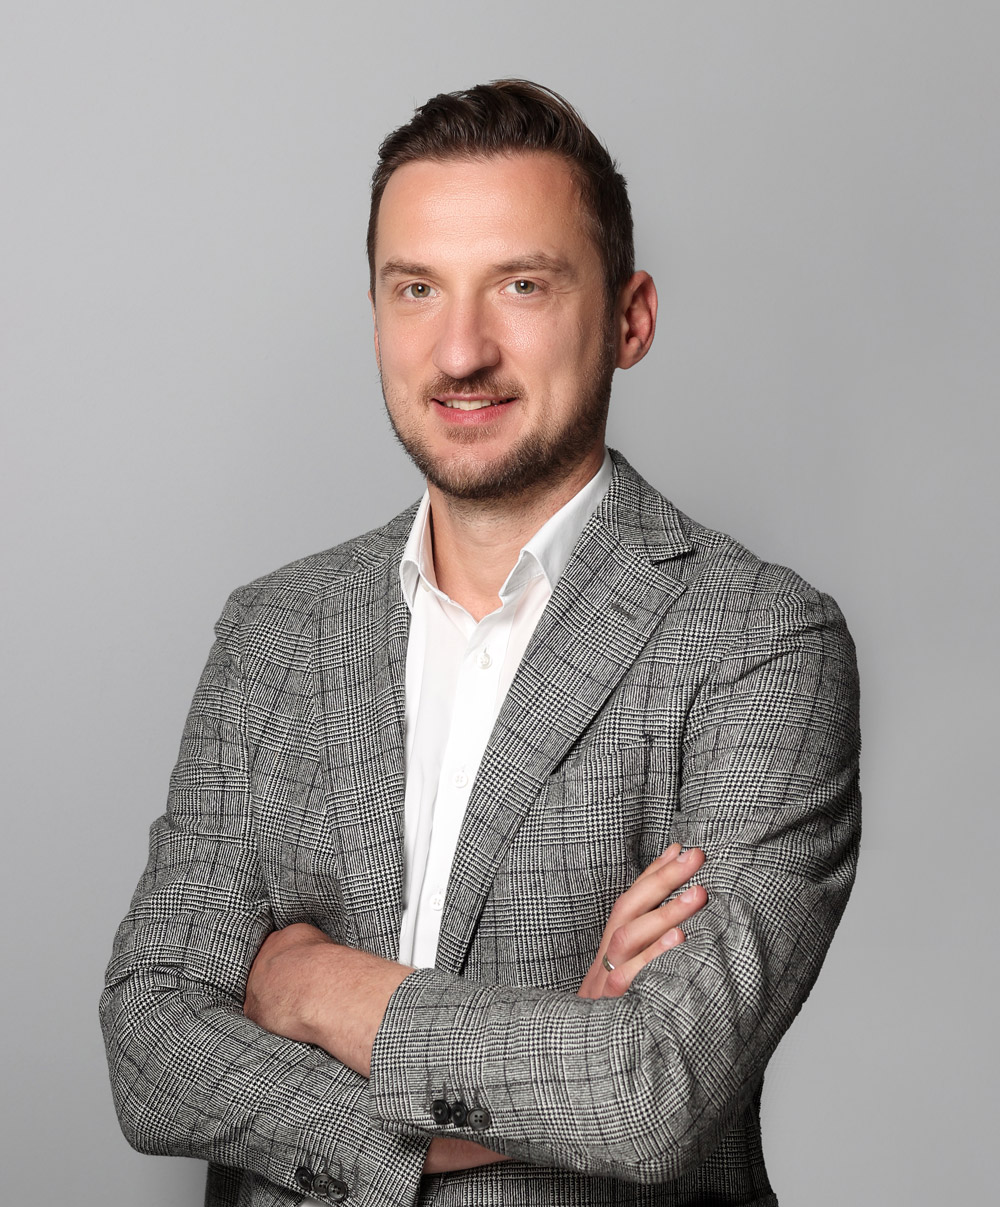 New Vice President of Marketing at Kompania Piwowarska